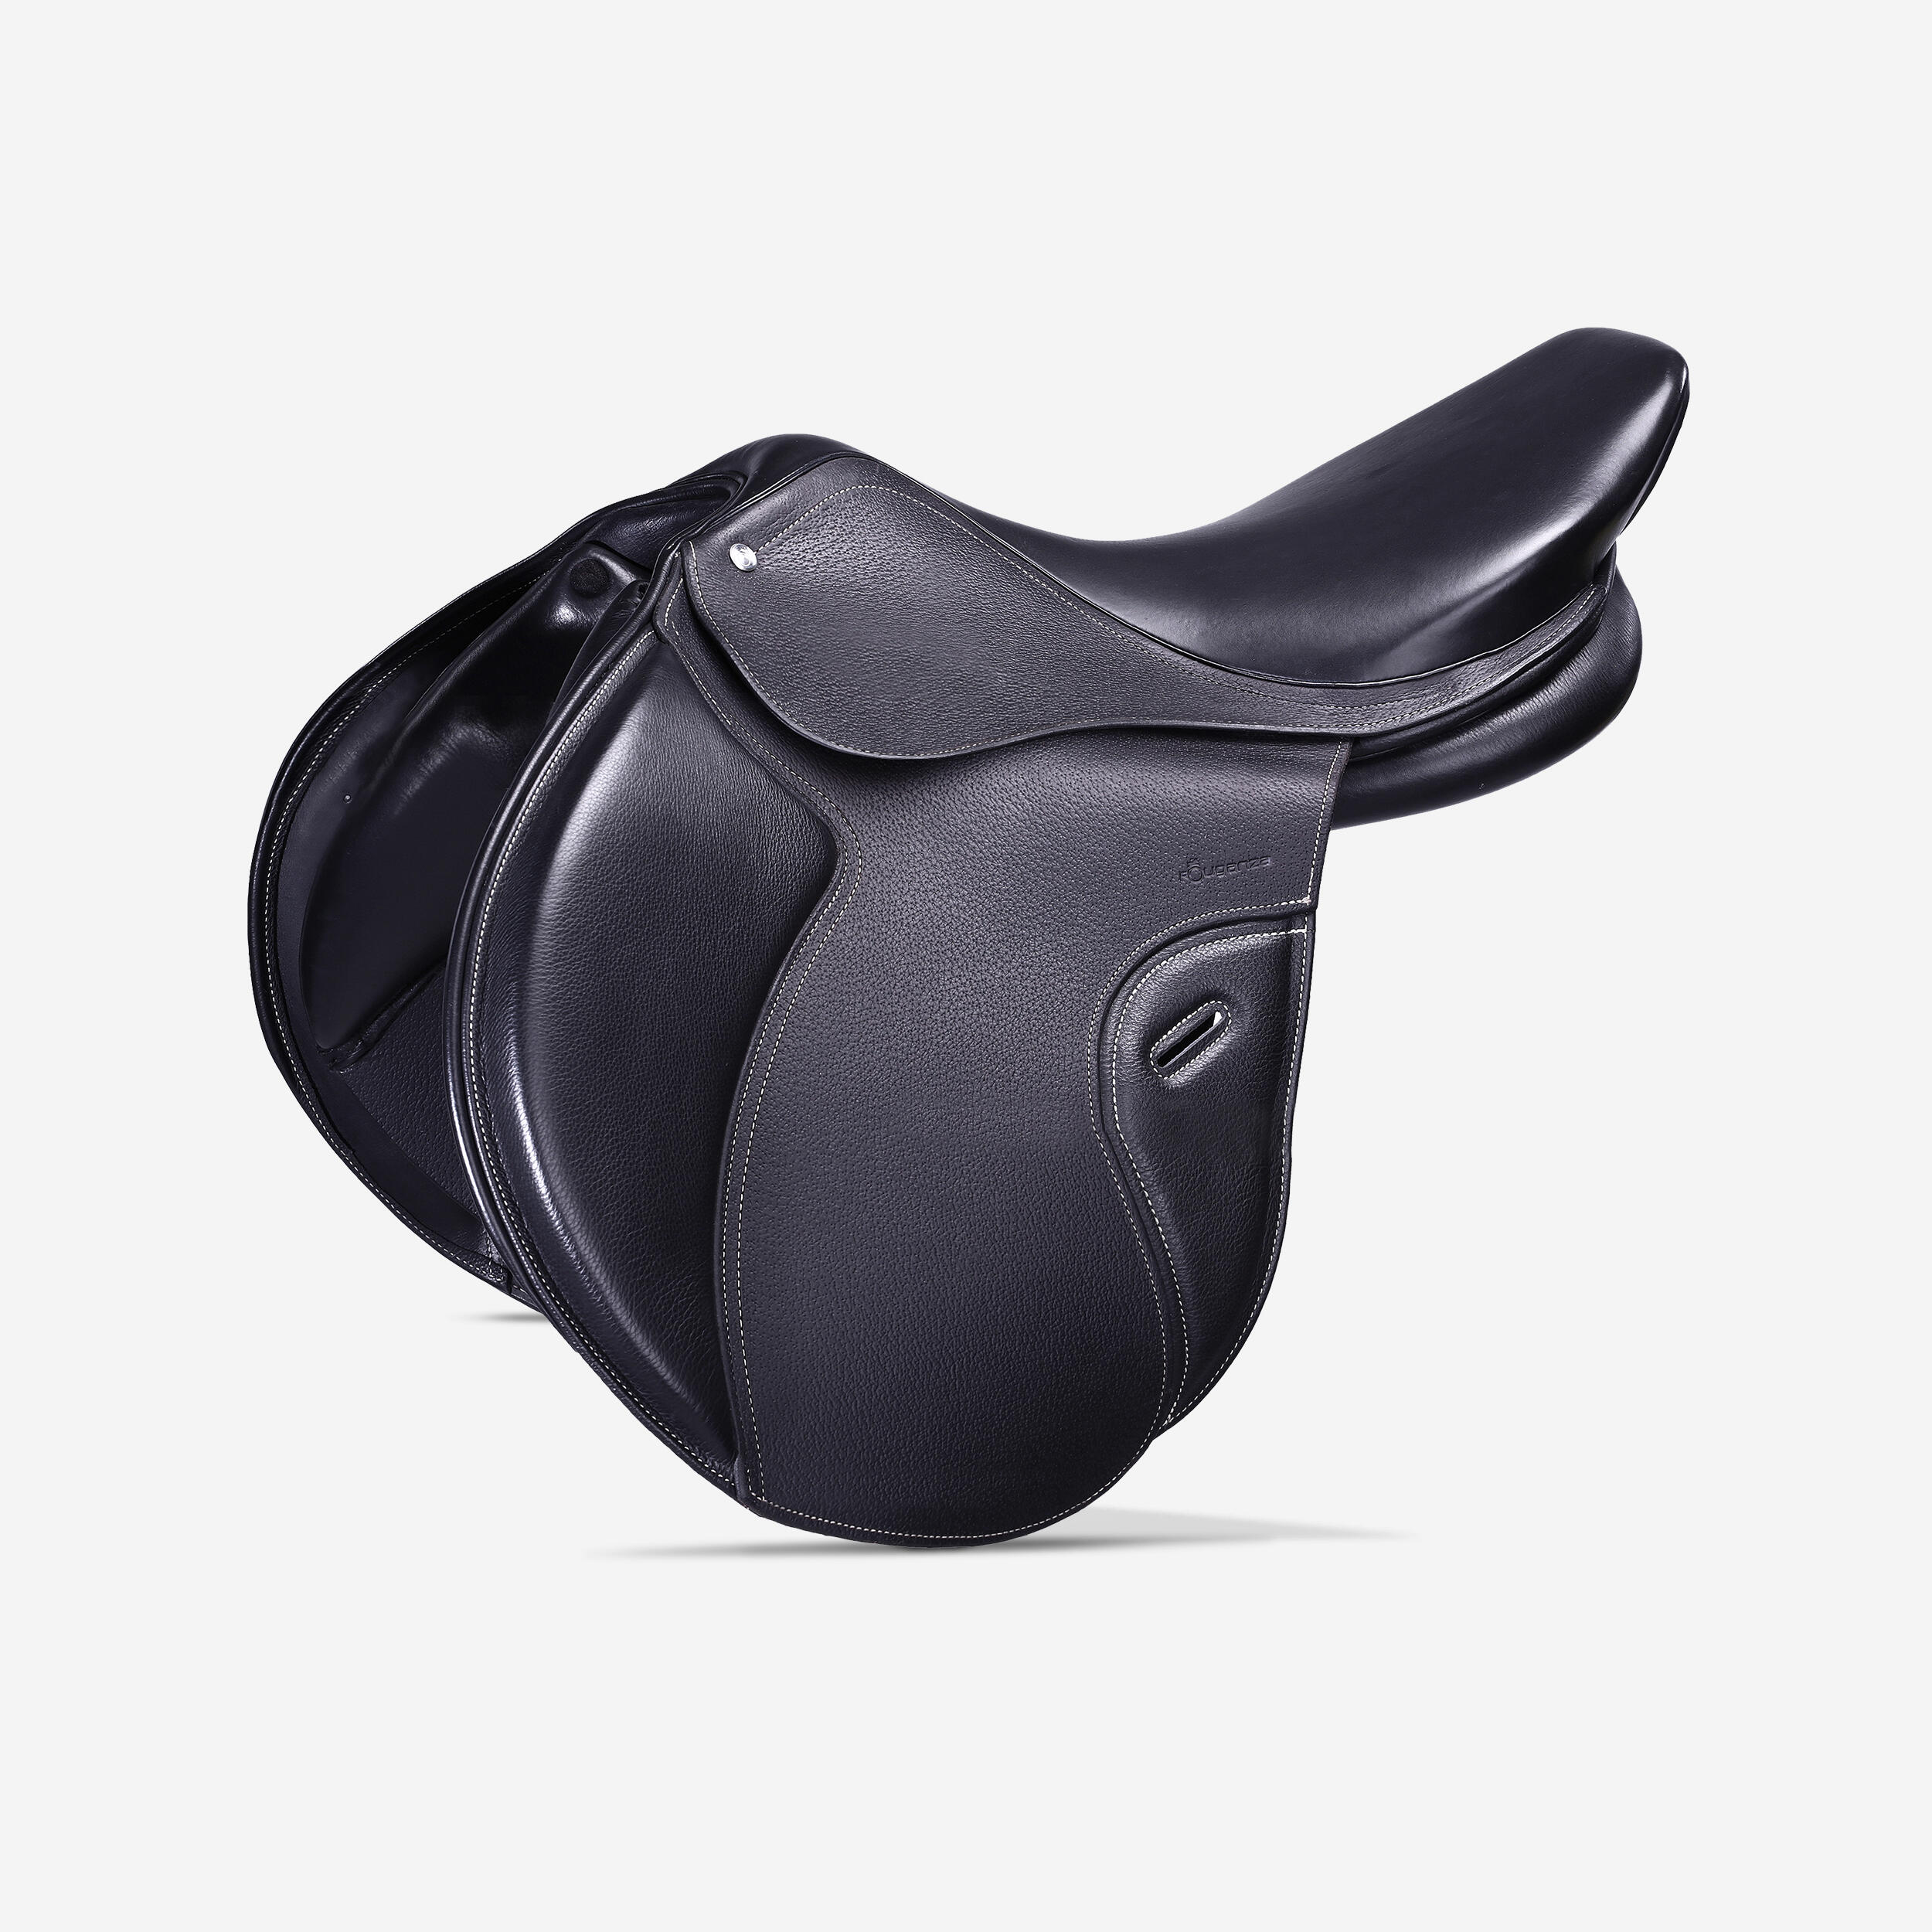 Image of "Horse Riding Versatile Leather Saddle for Horse Paddock 17.5"" - Black"